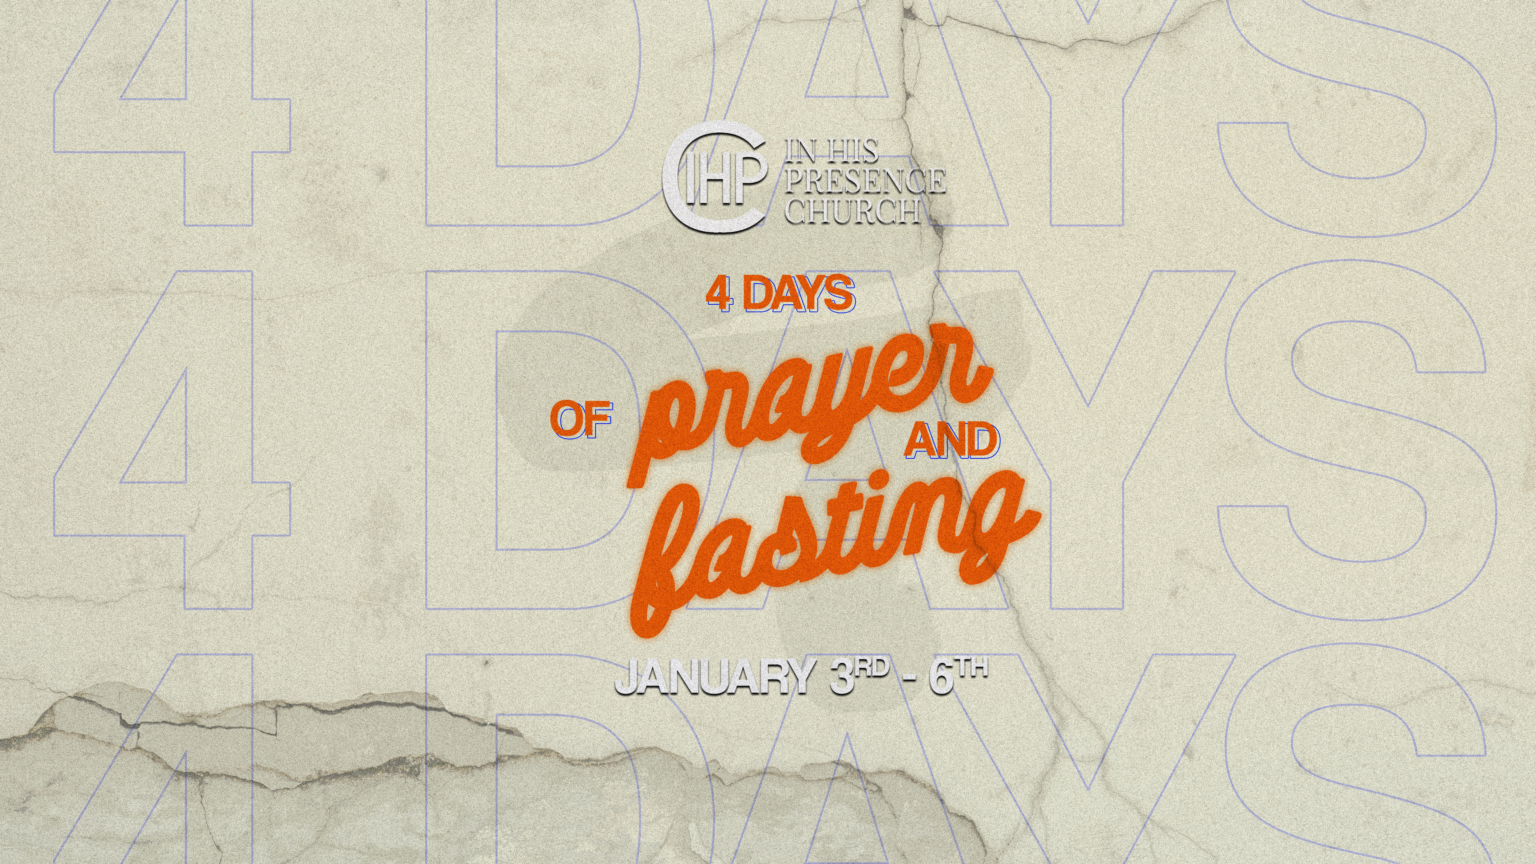 IHPC - 4 DAYS OF PRAYER AND FASTING